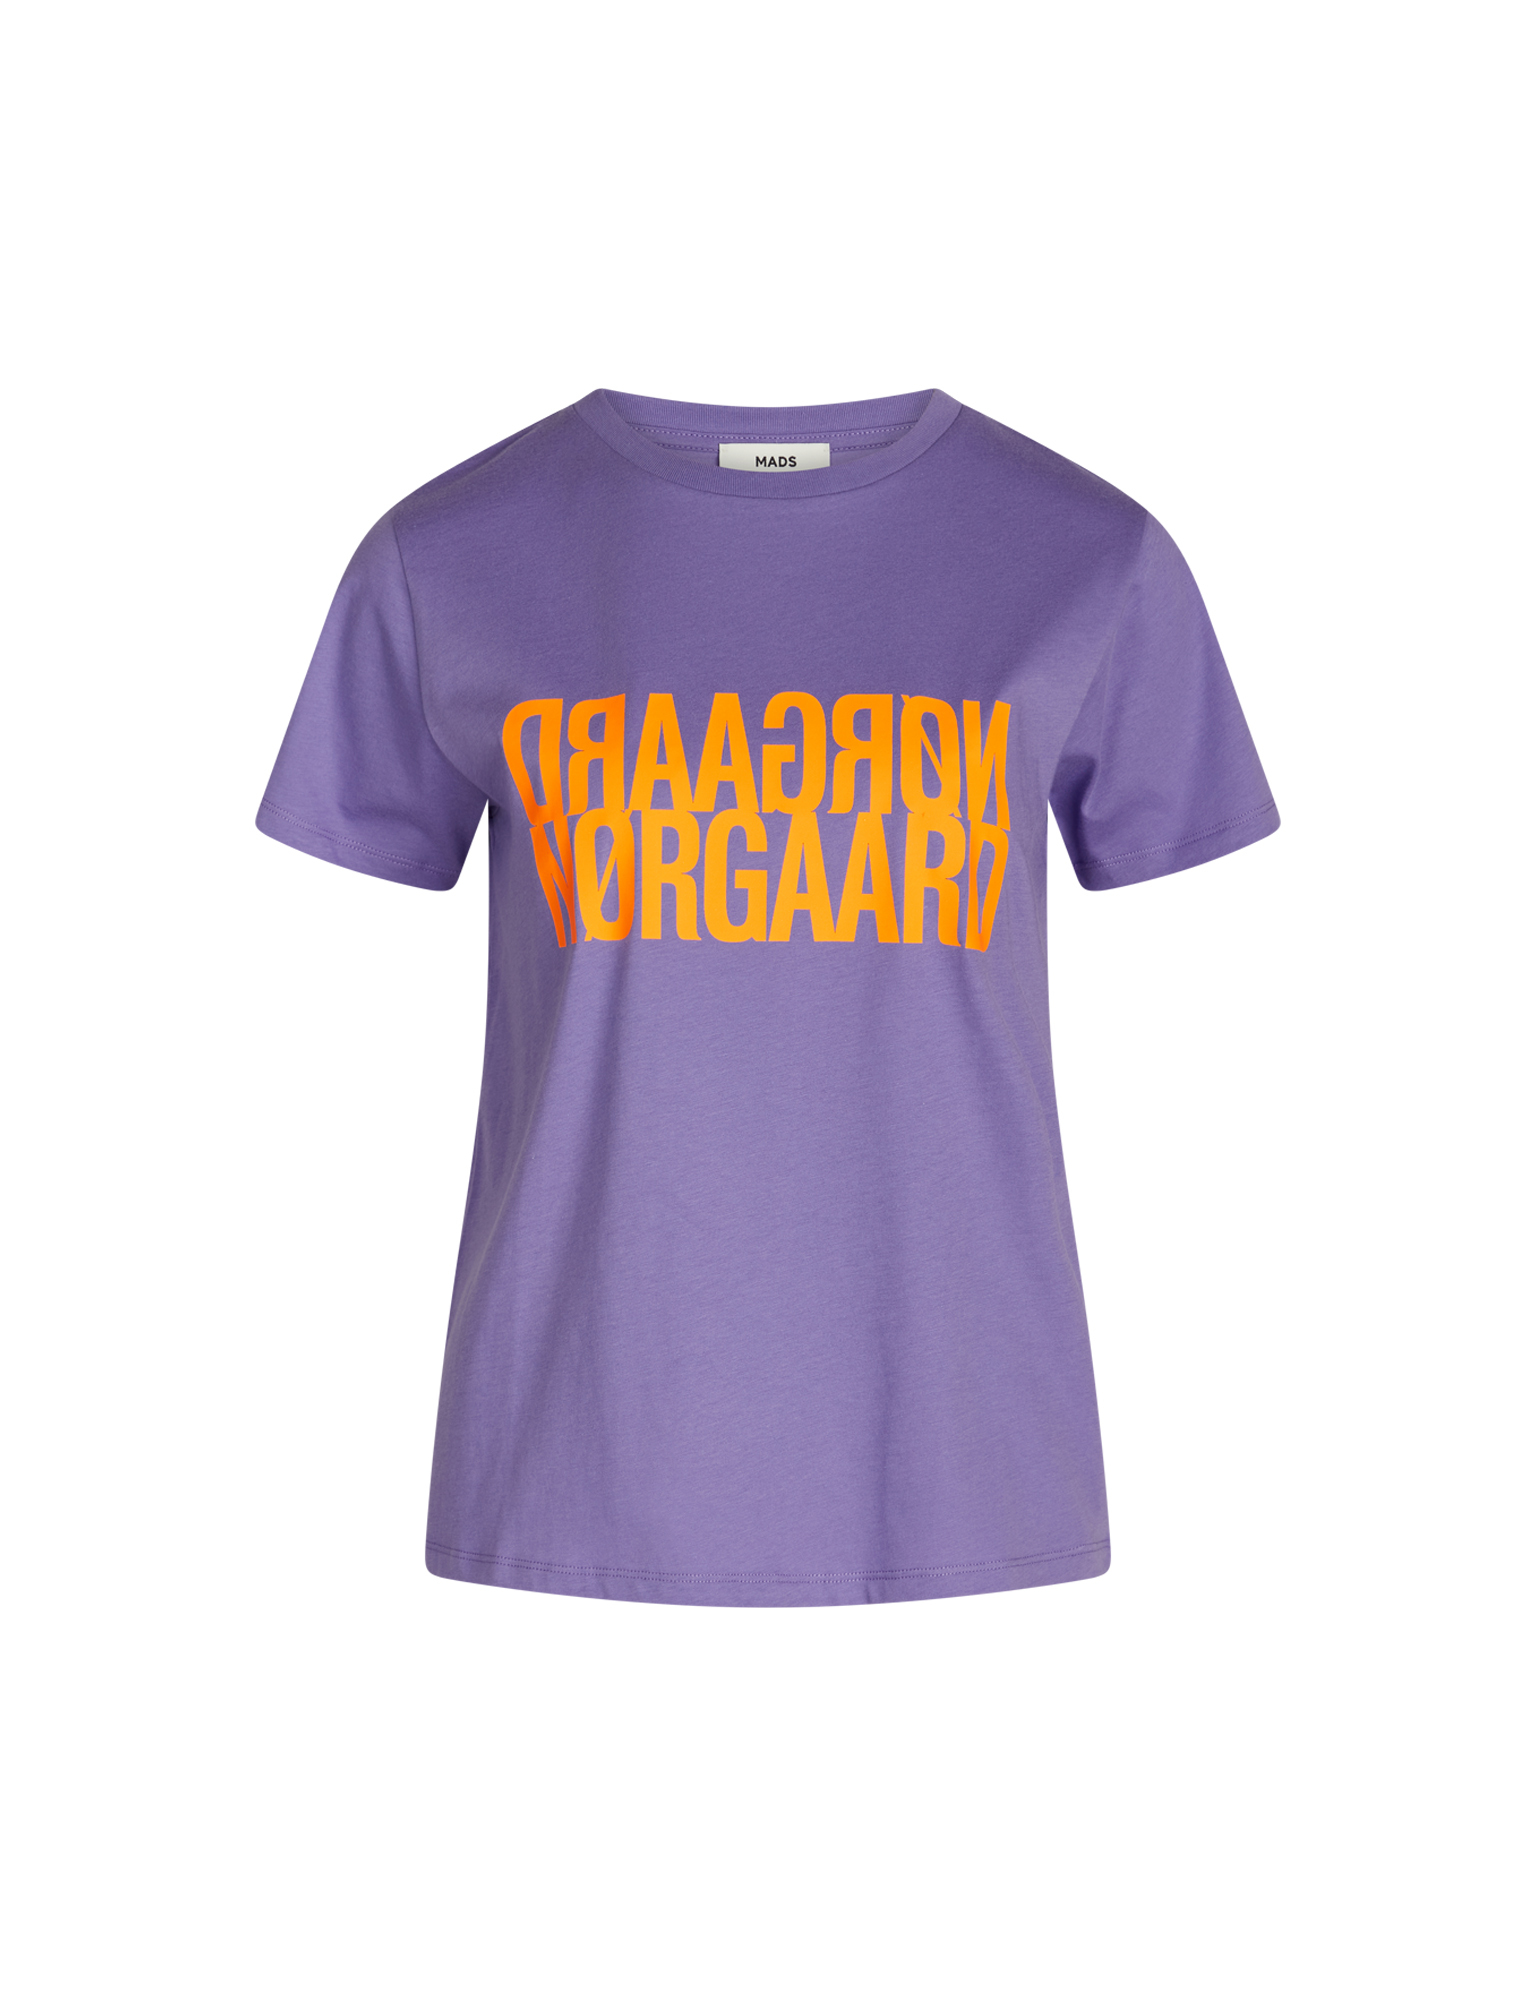 Single Organic Trenda P T-shirt